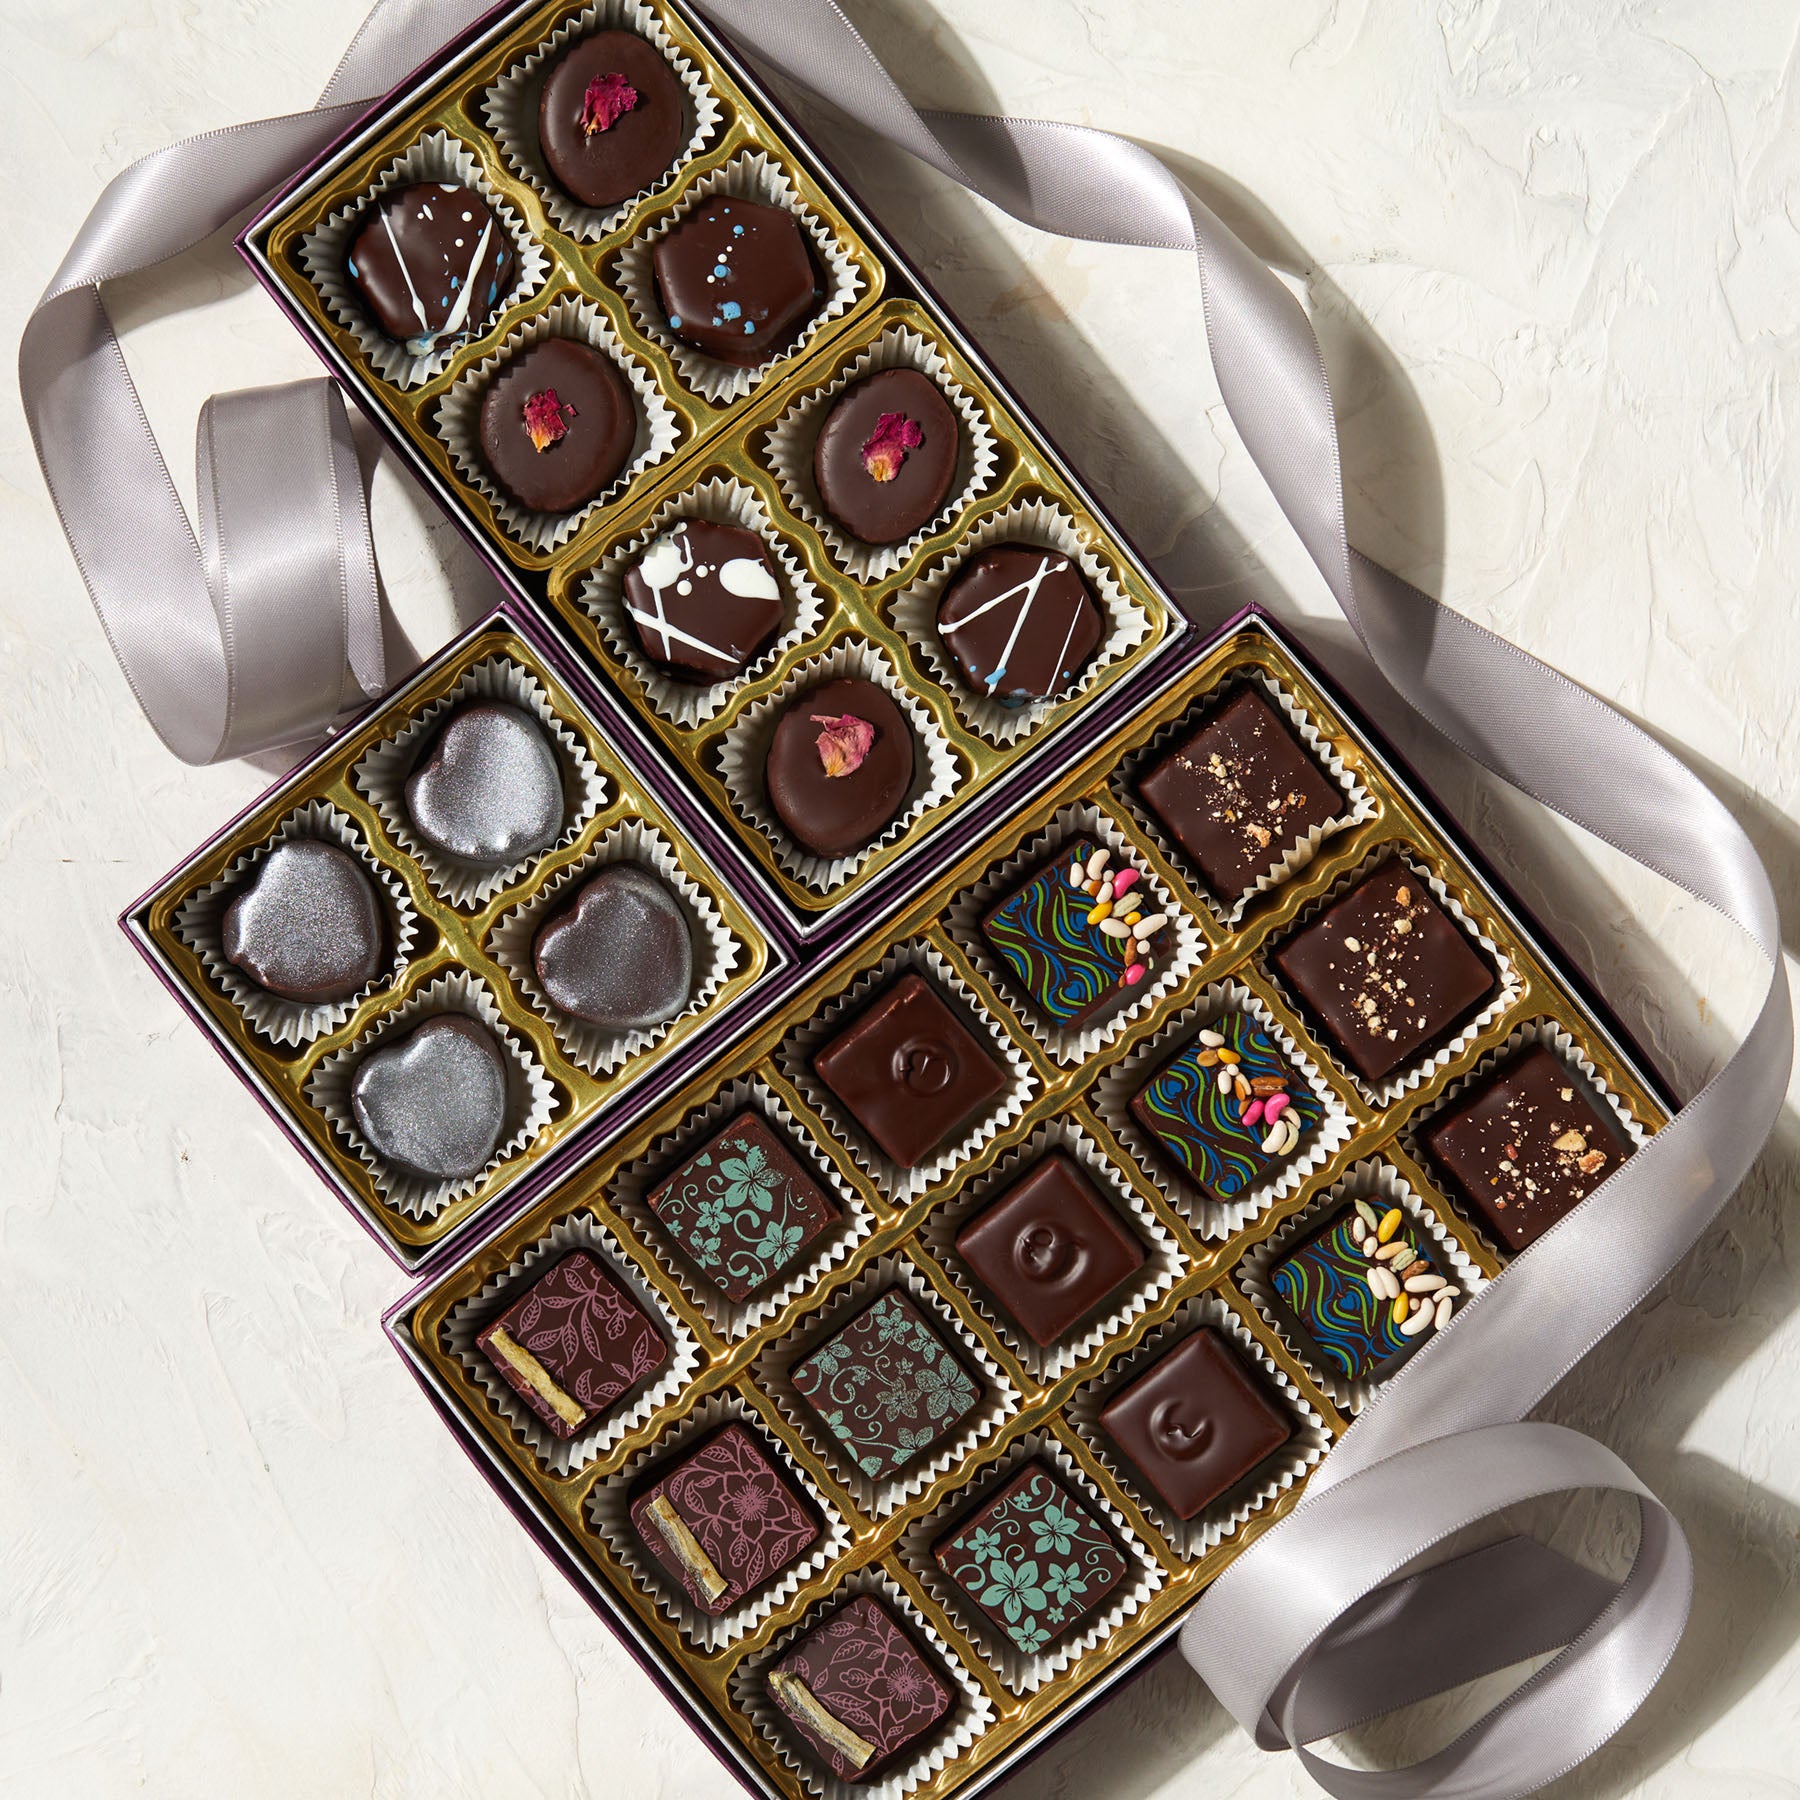 The Ultimate Chocolate Bonbon Gift Set